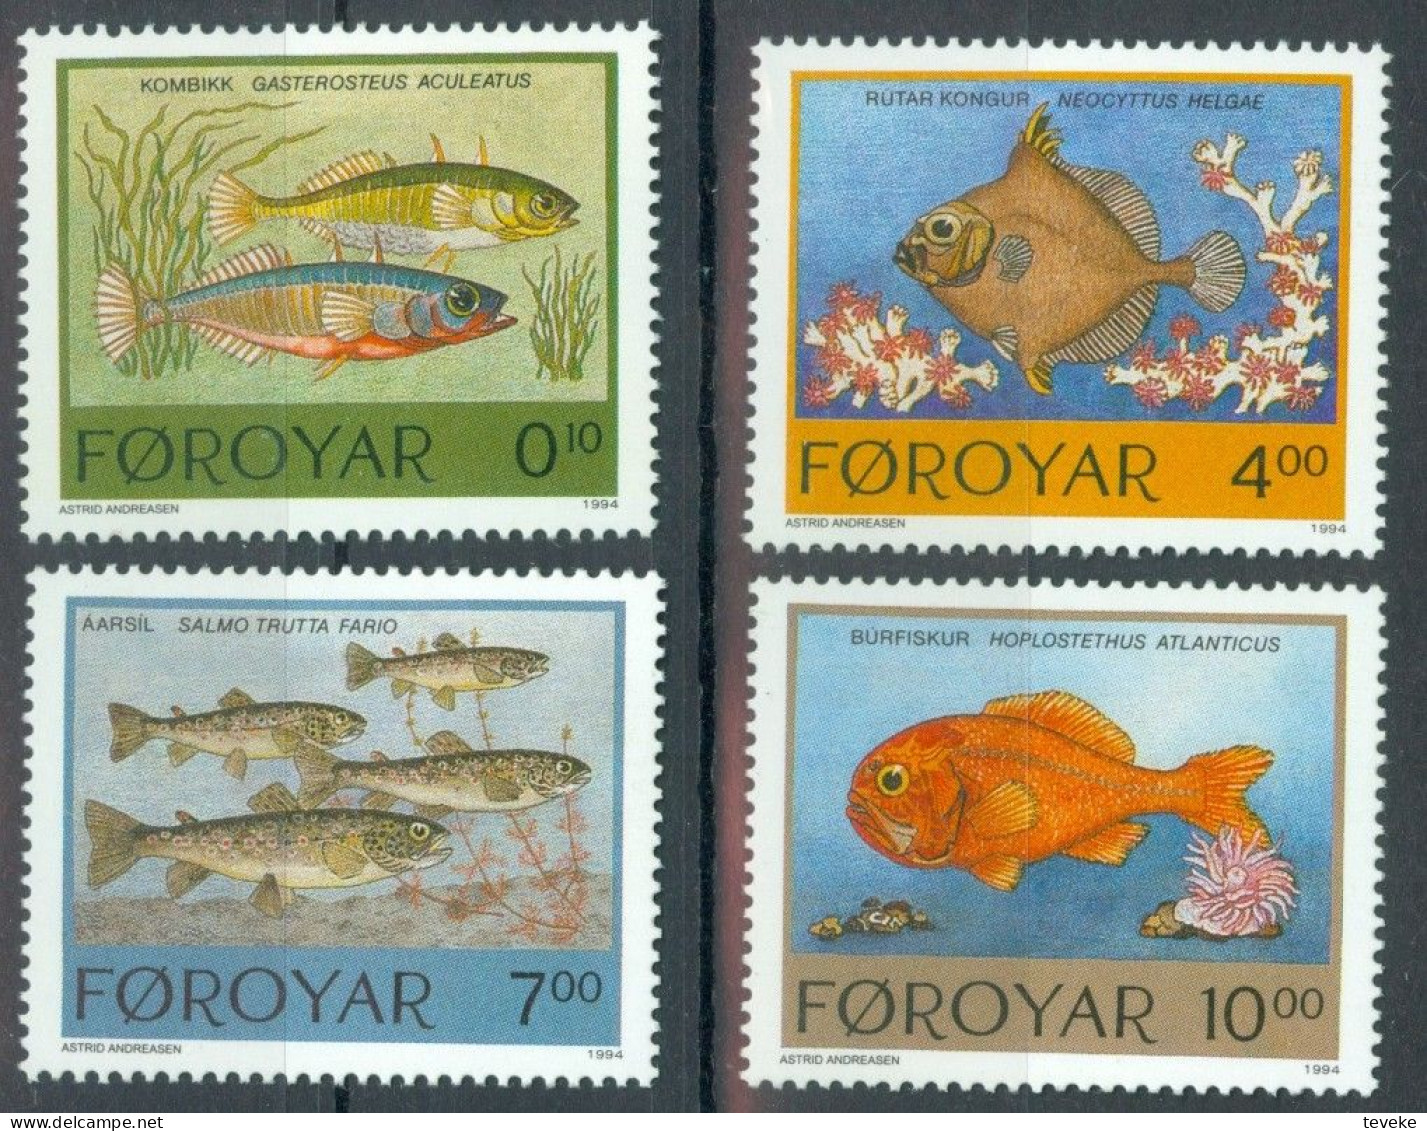 FAEROËR 1994 - MiNr. 256/259 - **/MNH - Fauna - Endemic Fishes - Faroe Islands